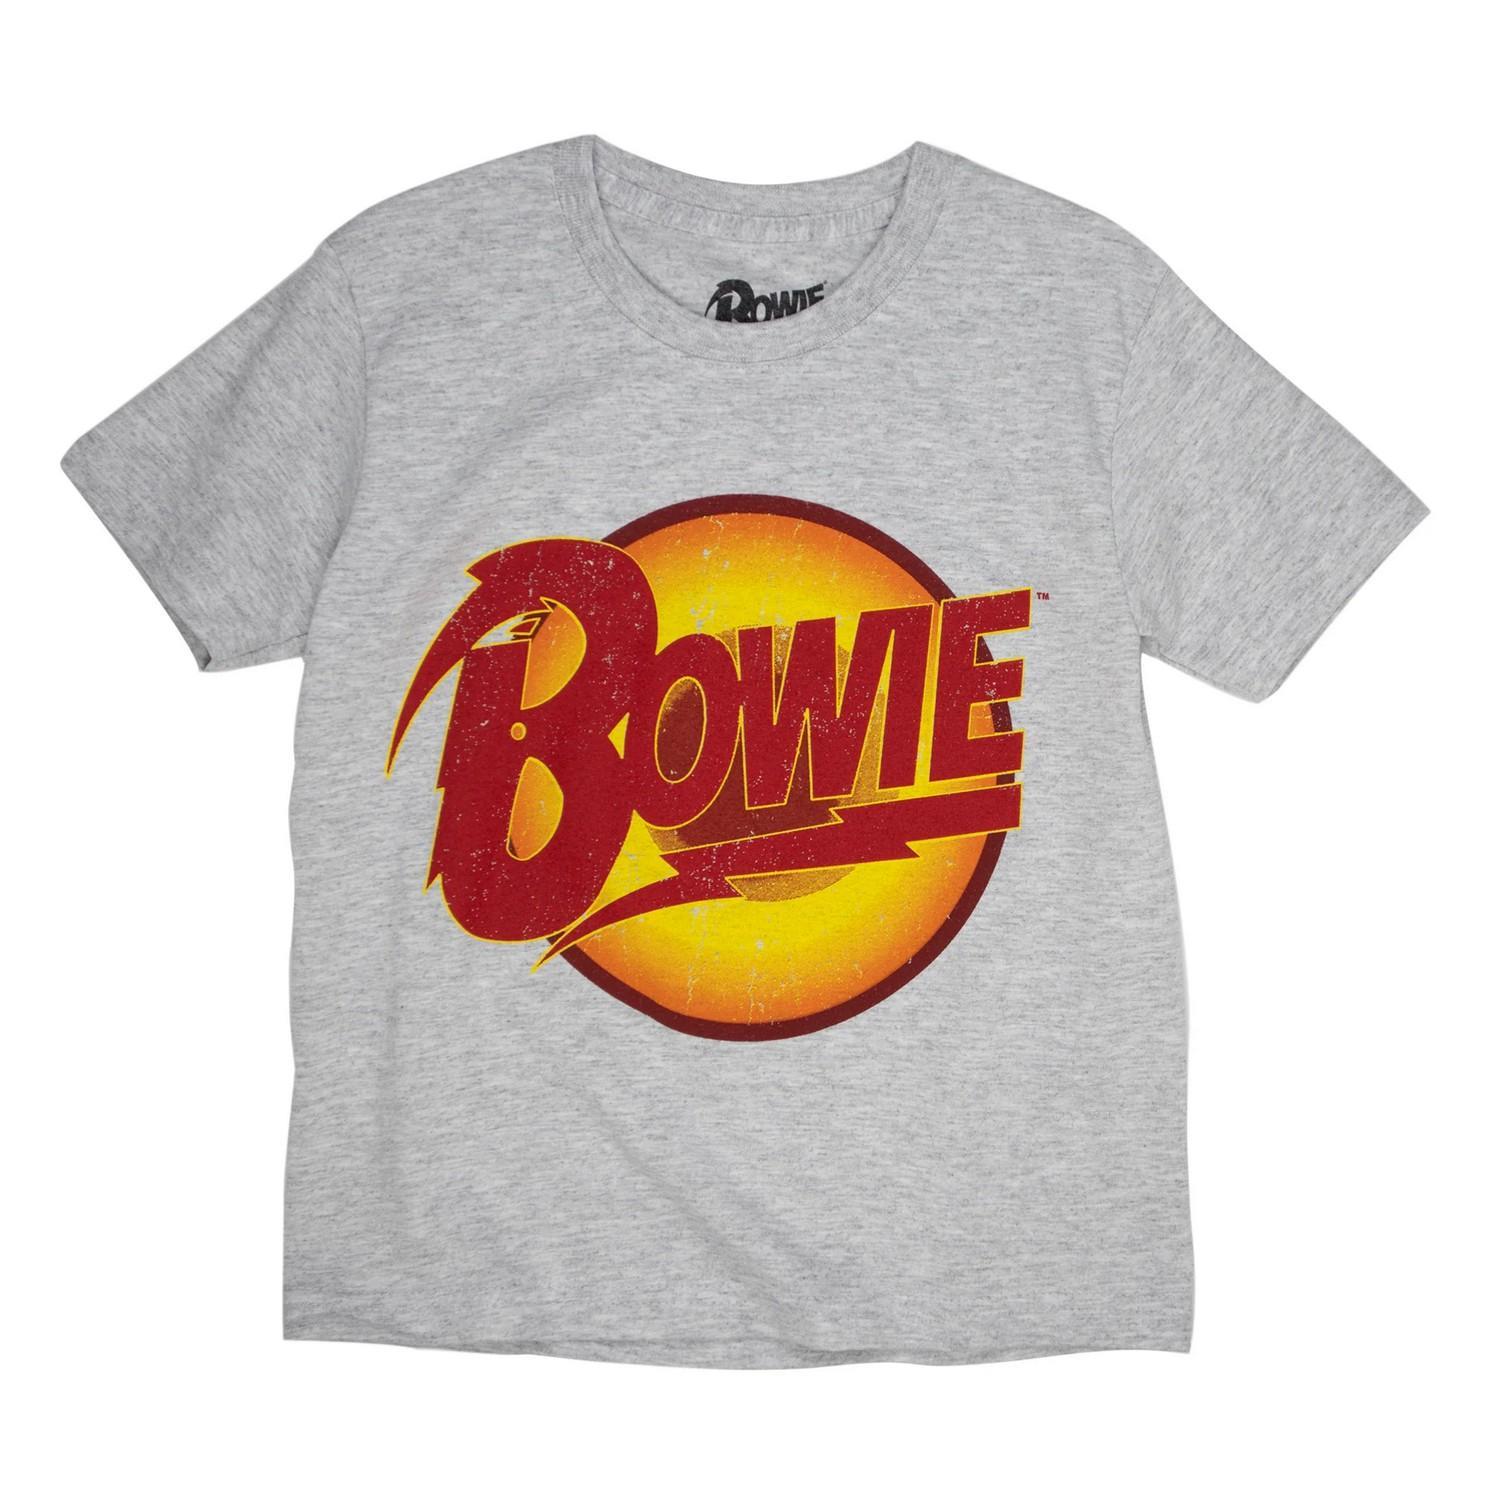 David Bowie Childrens/Kids Diamond Dogs Vintage Logo T-Shirt (Heather Grey) (5-6 Years)